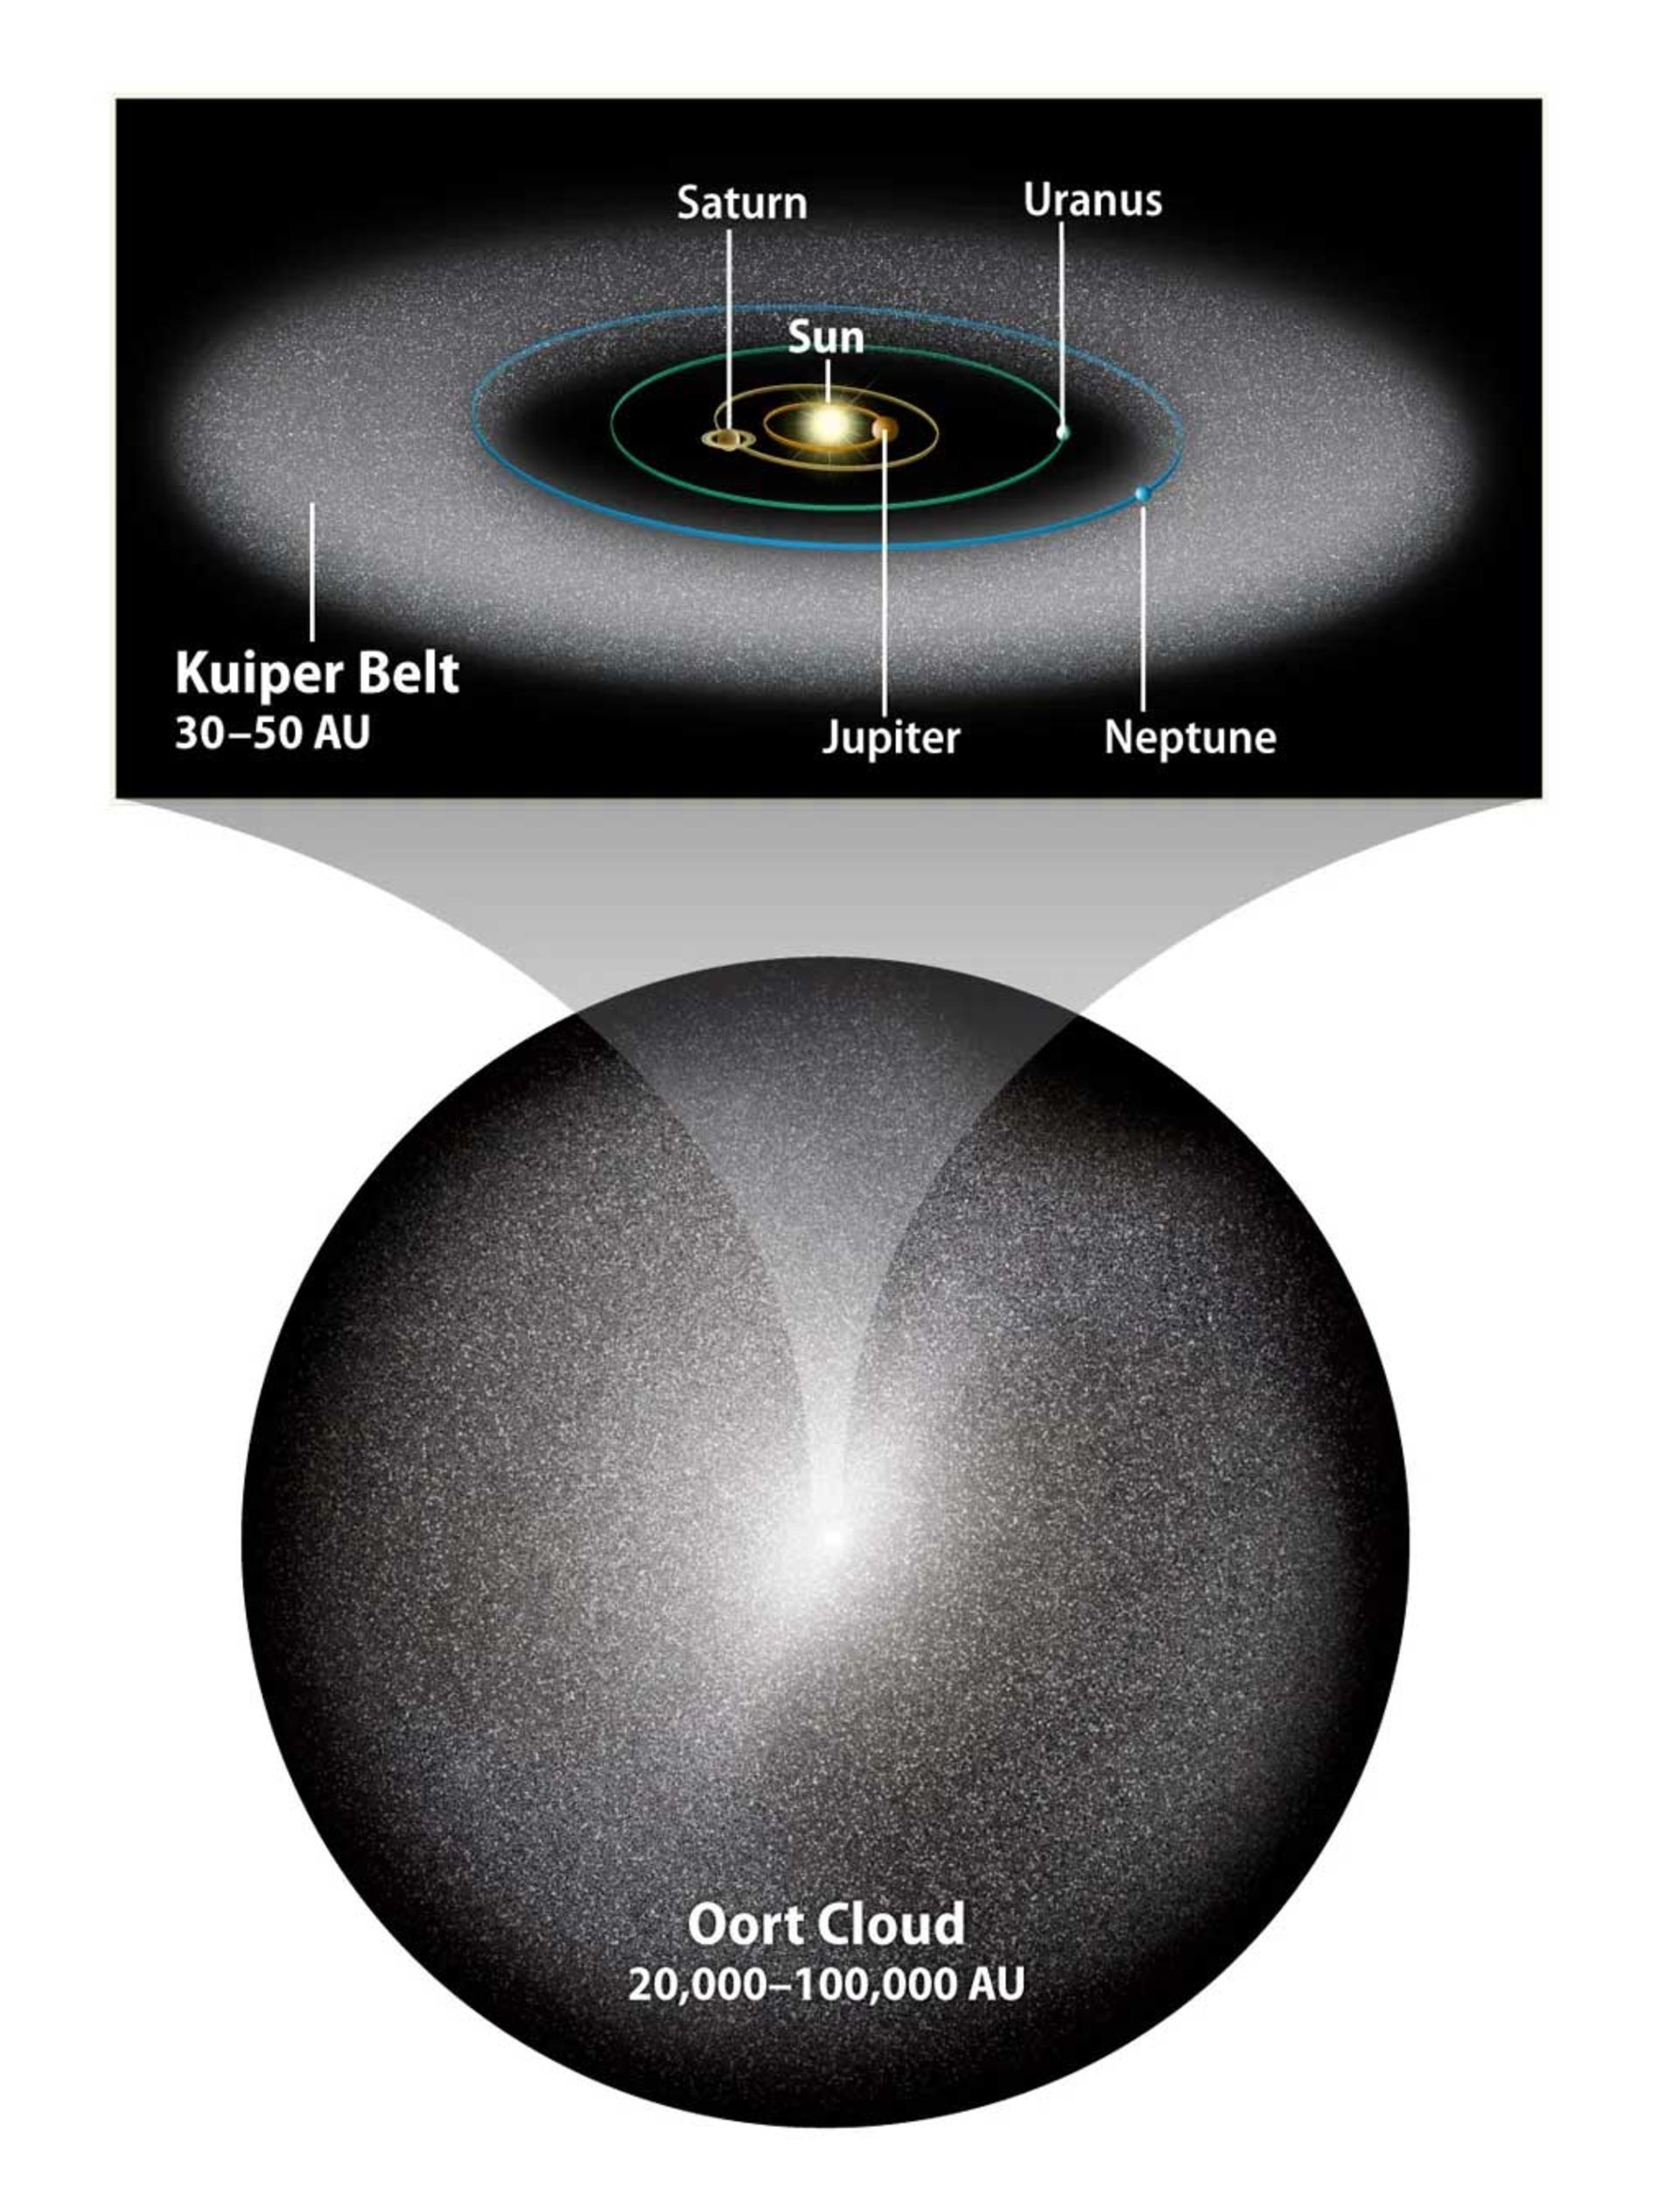 Oort cloud and Kuiper belt